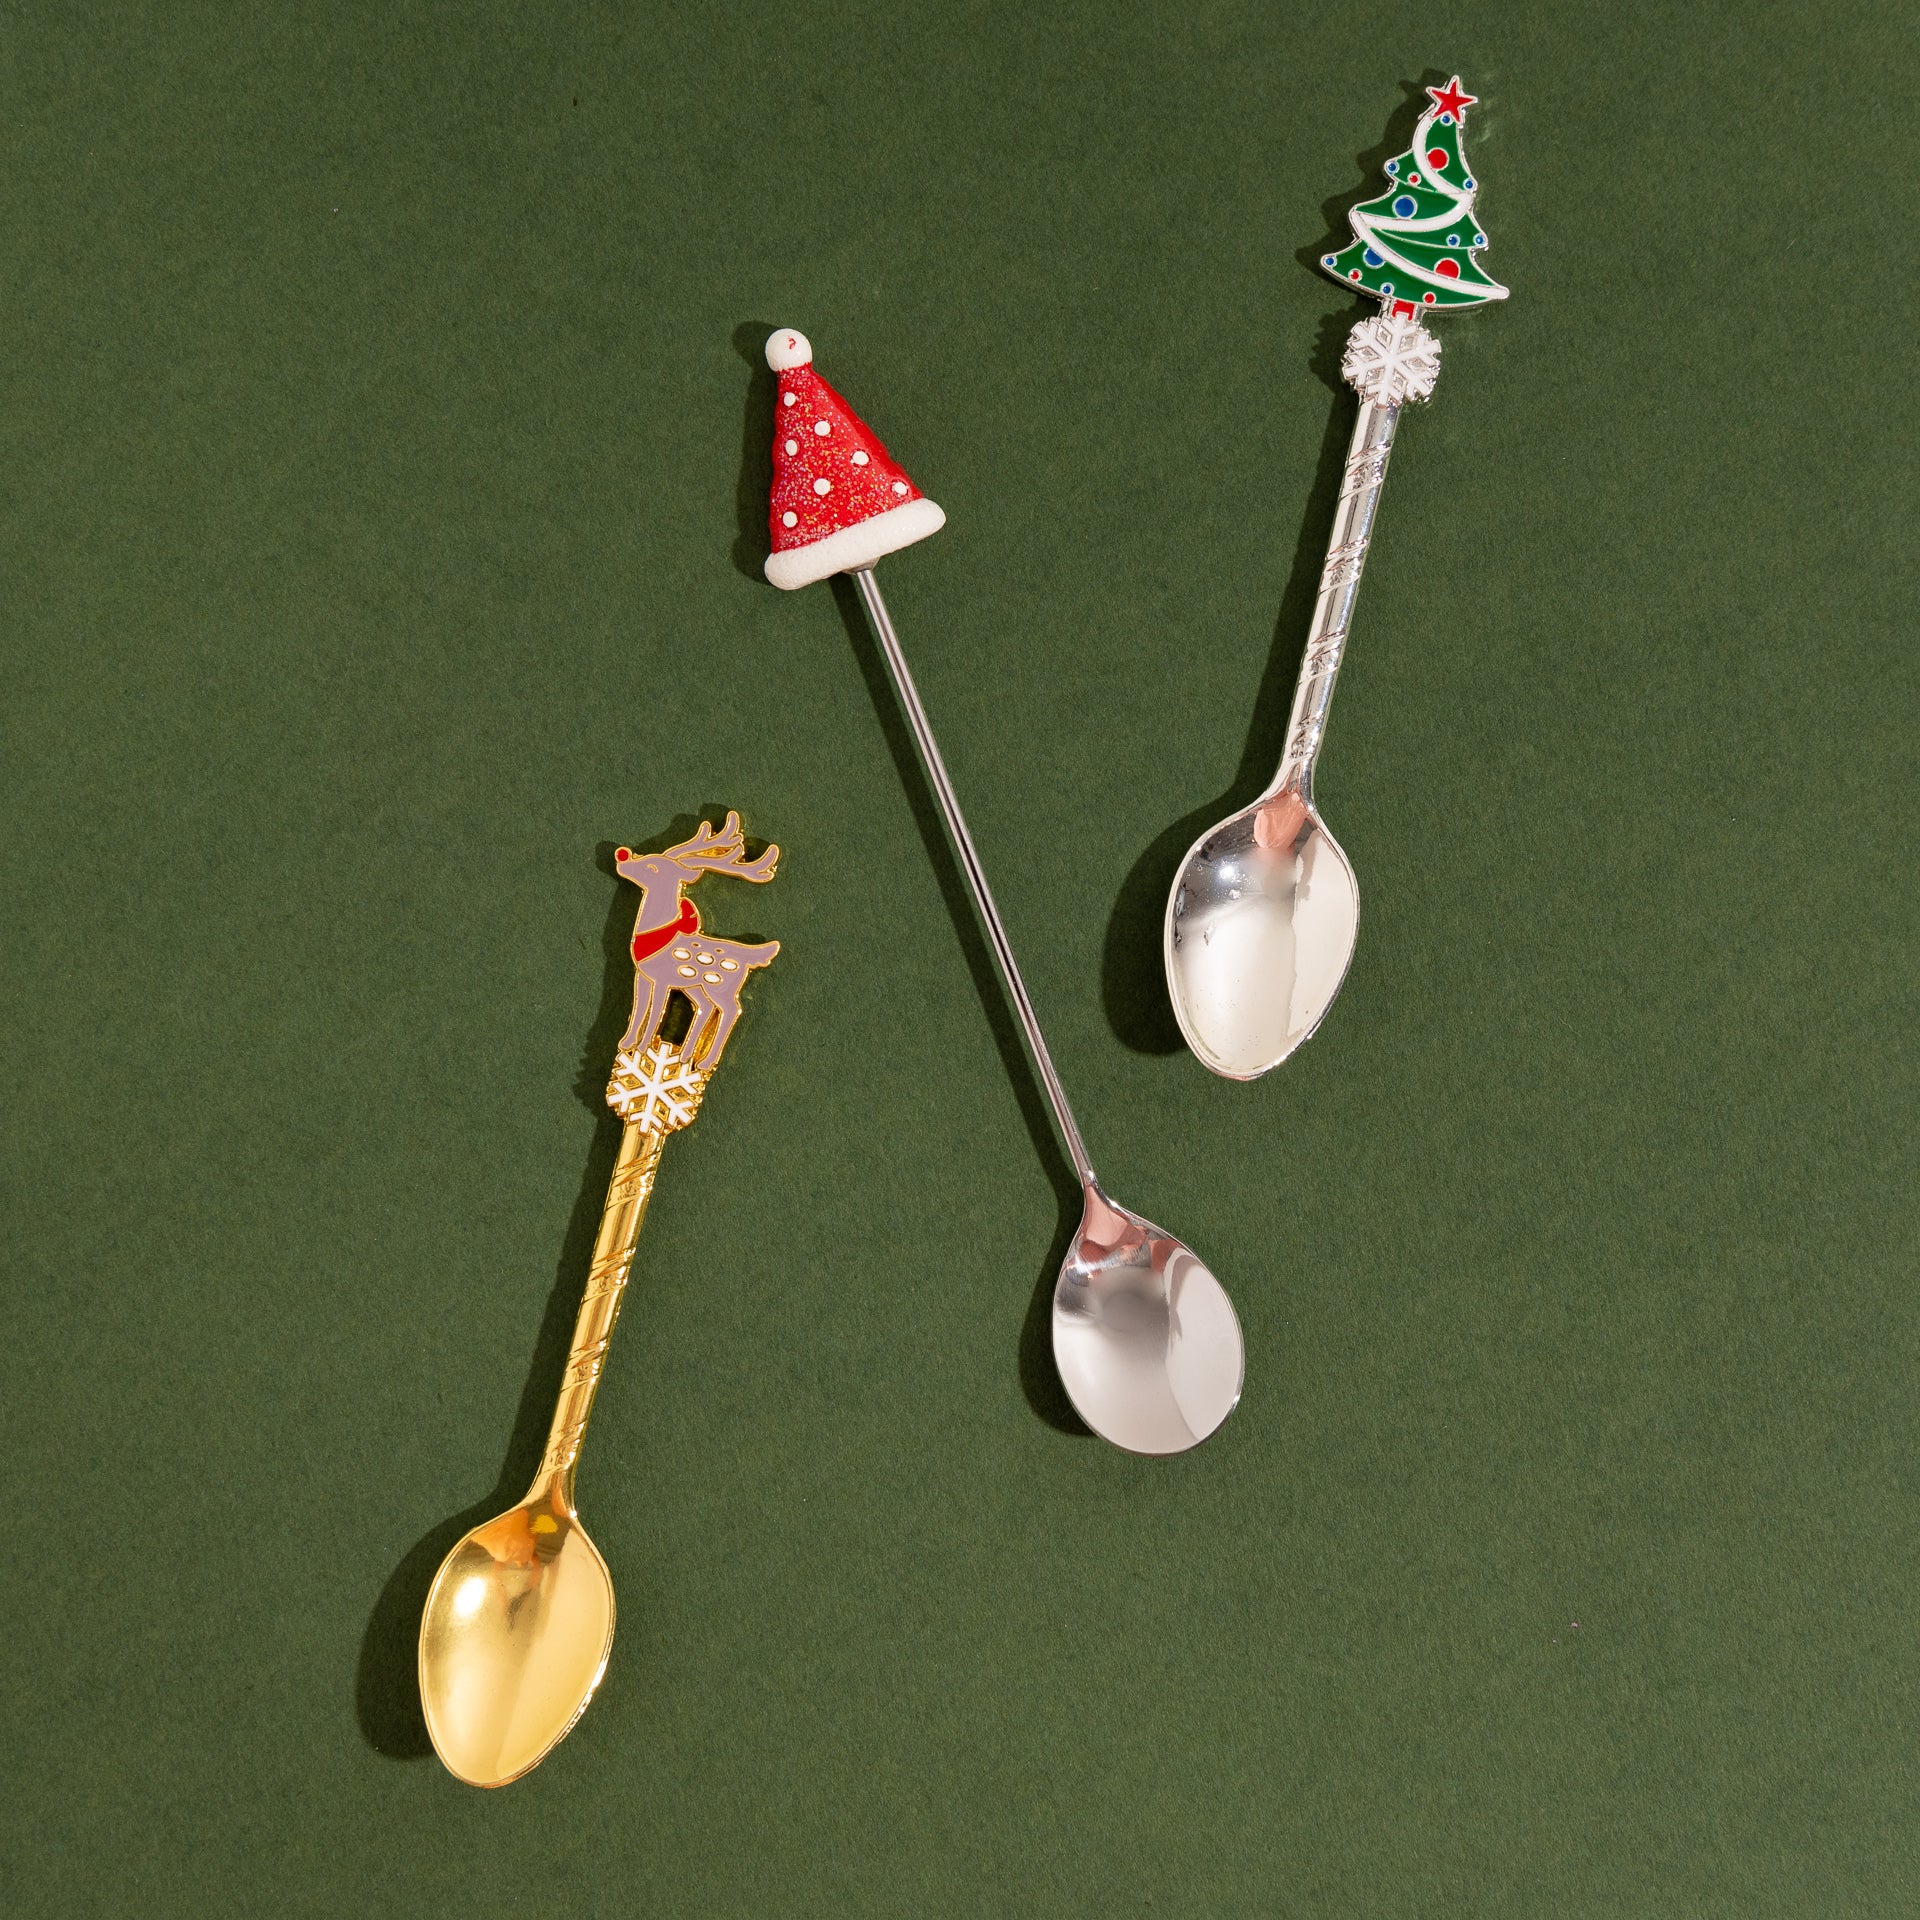 Christmas Novelty Teaspoons (assorted styles)